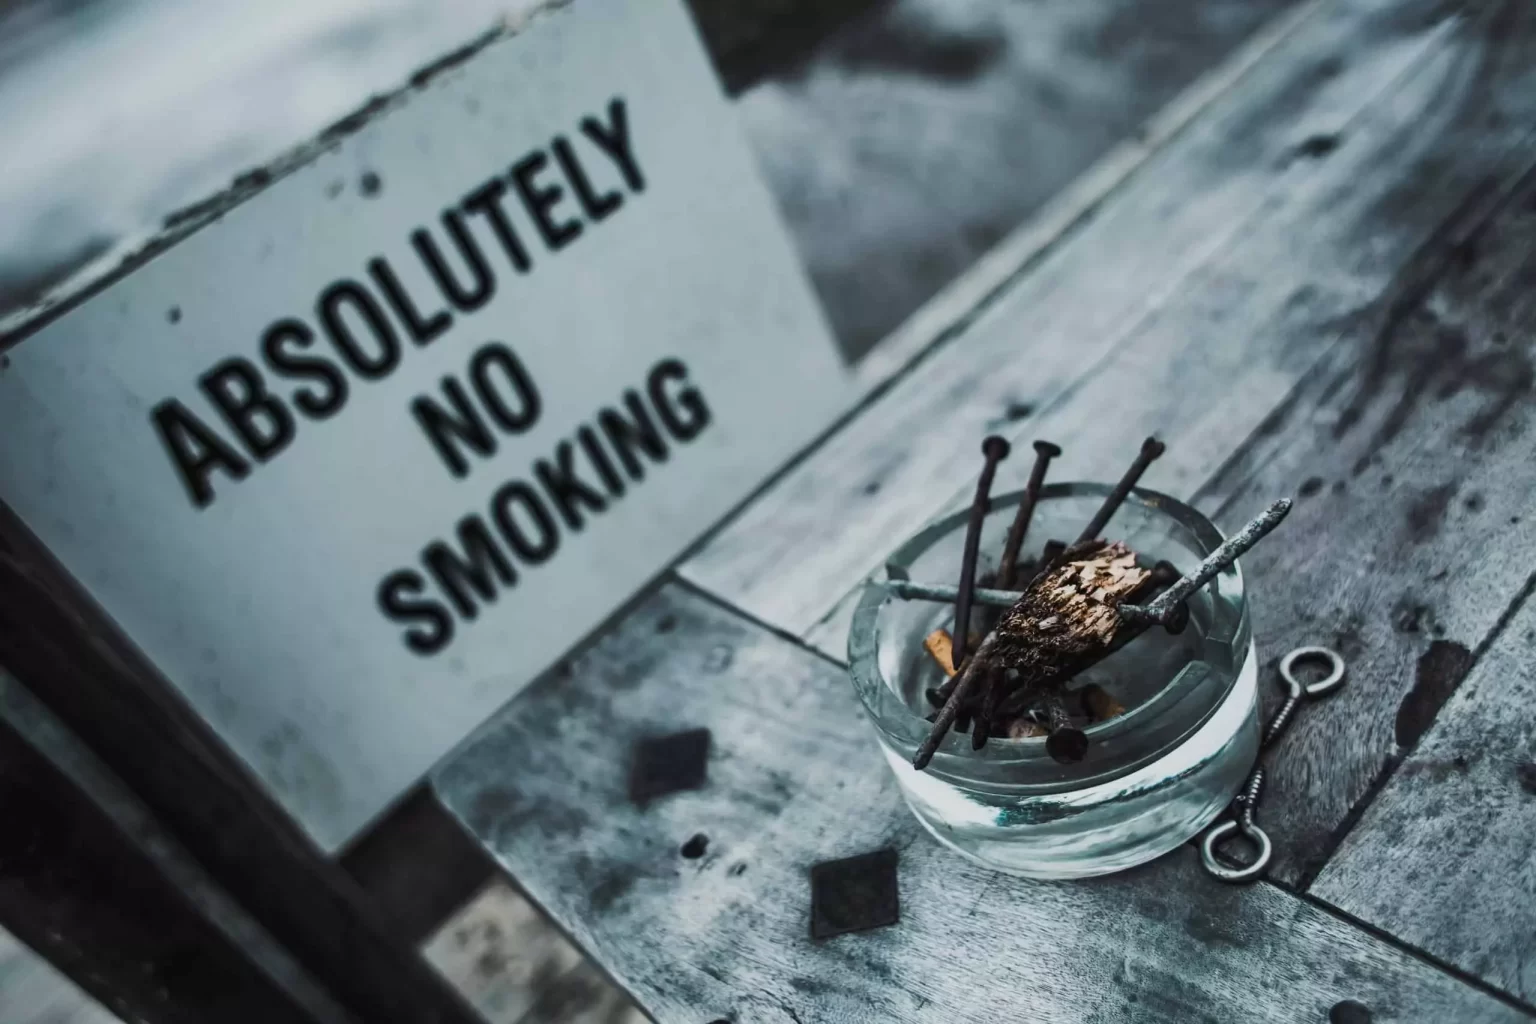 Absolutely no smoking.